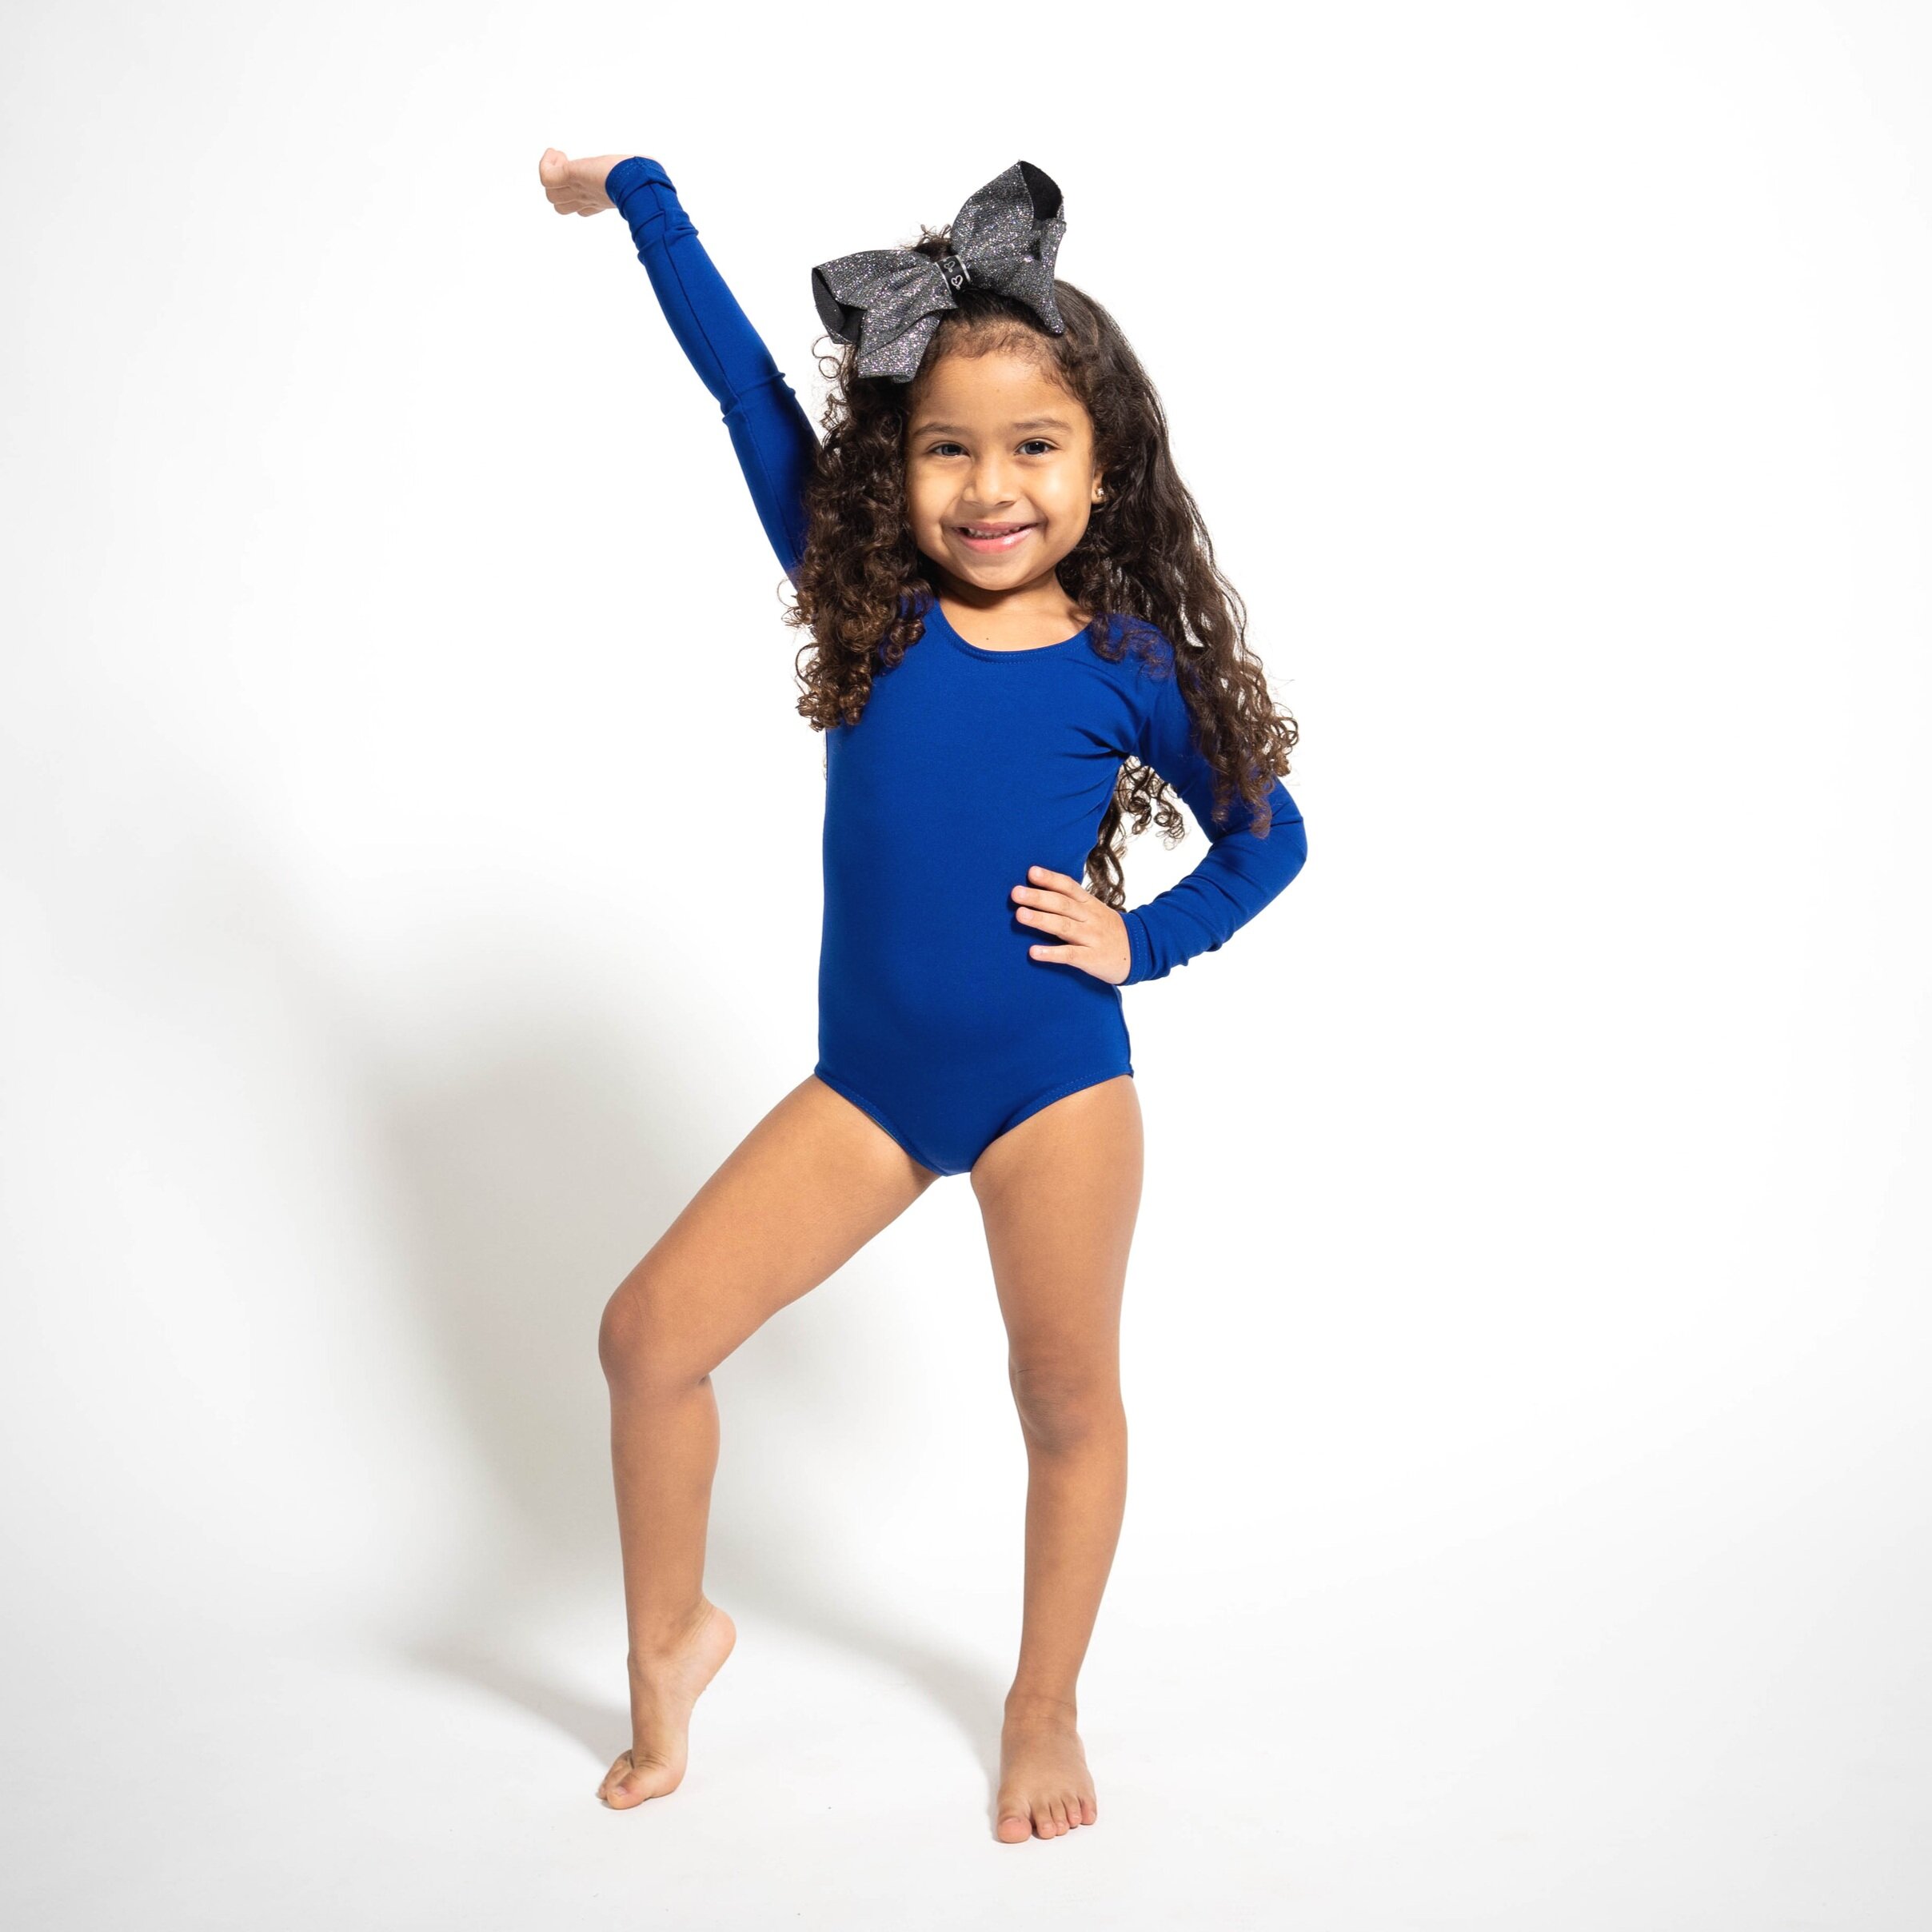 Photo of little girl wearing blue leotard posing. (Copy) (Copy) (Copy) (Copy) (Copy)